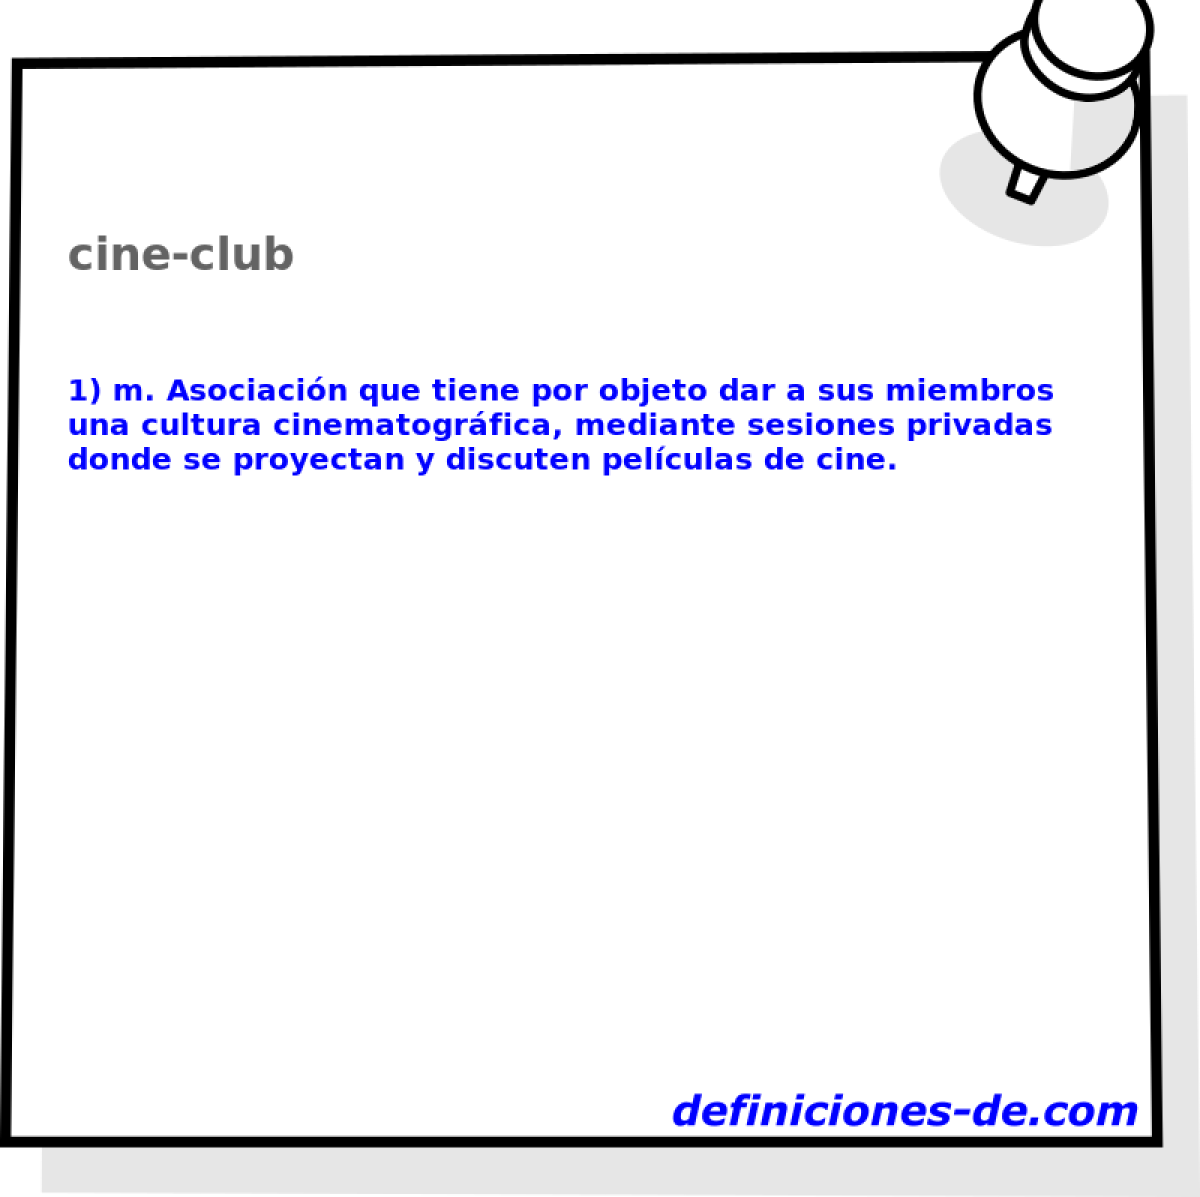 cine-club 